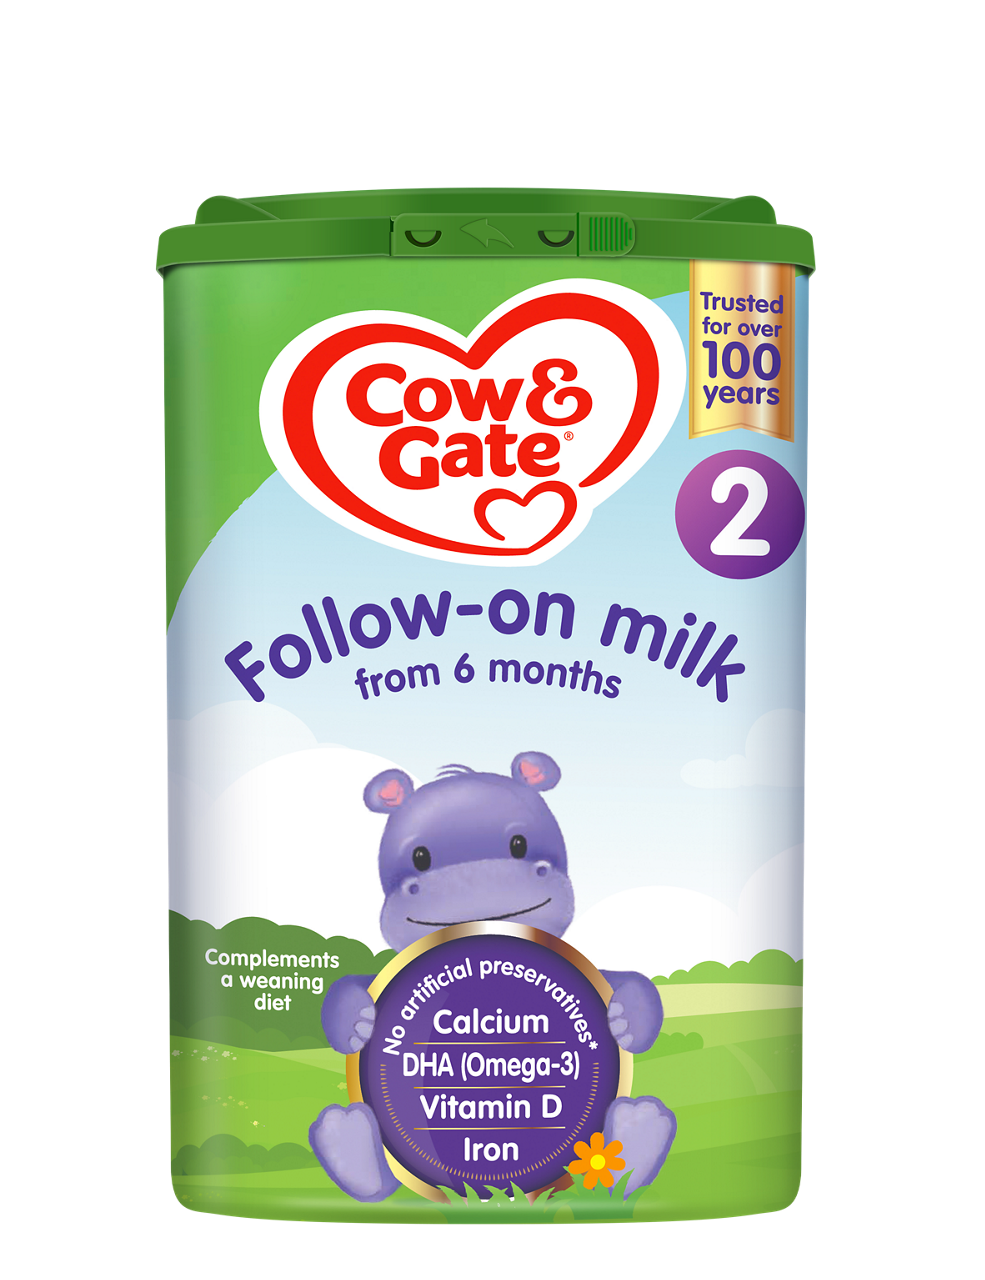 Cow & Gate Follow-on milk (Powder) 800g EaZypack